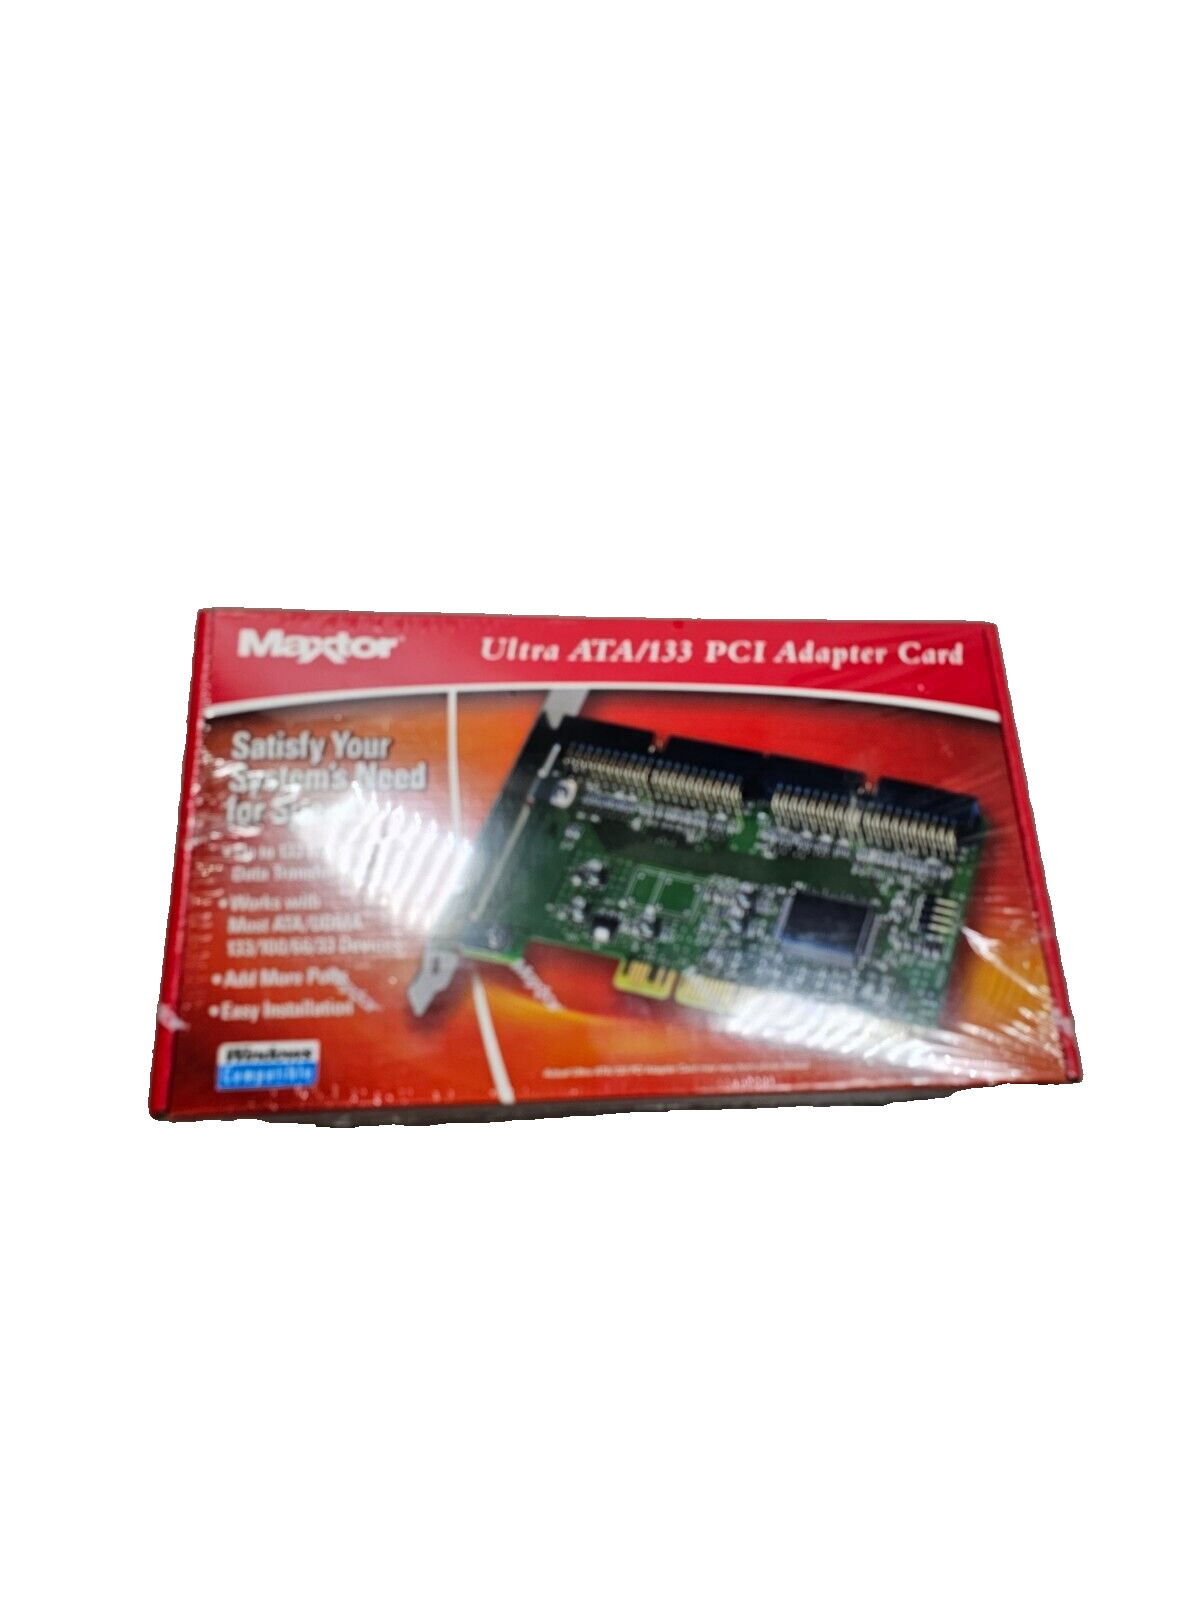 Maxtor Ultra ATA/133 IDE Adapter Card PCI K01PCAT133 New, Sealed